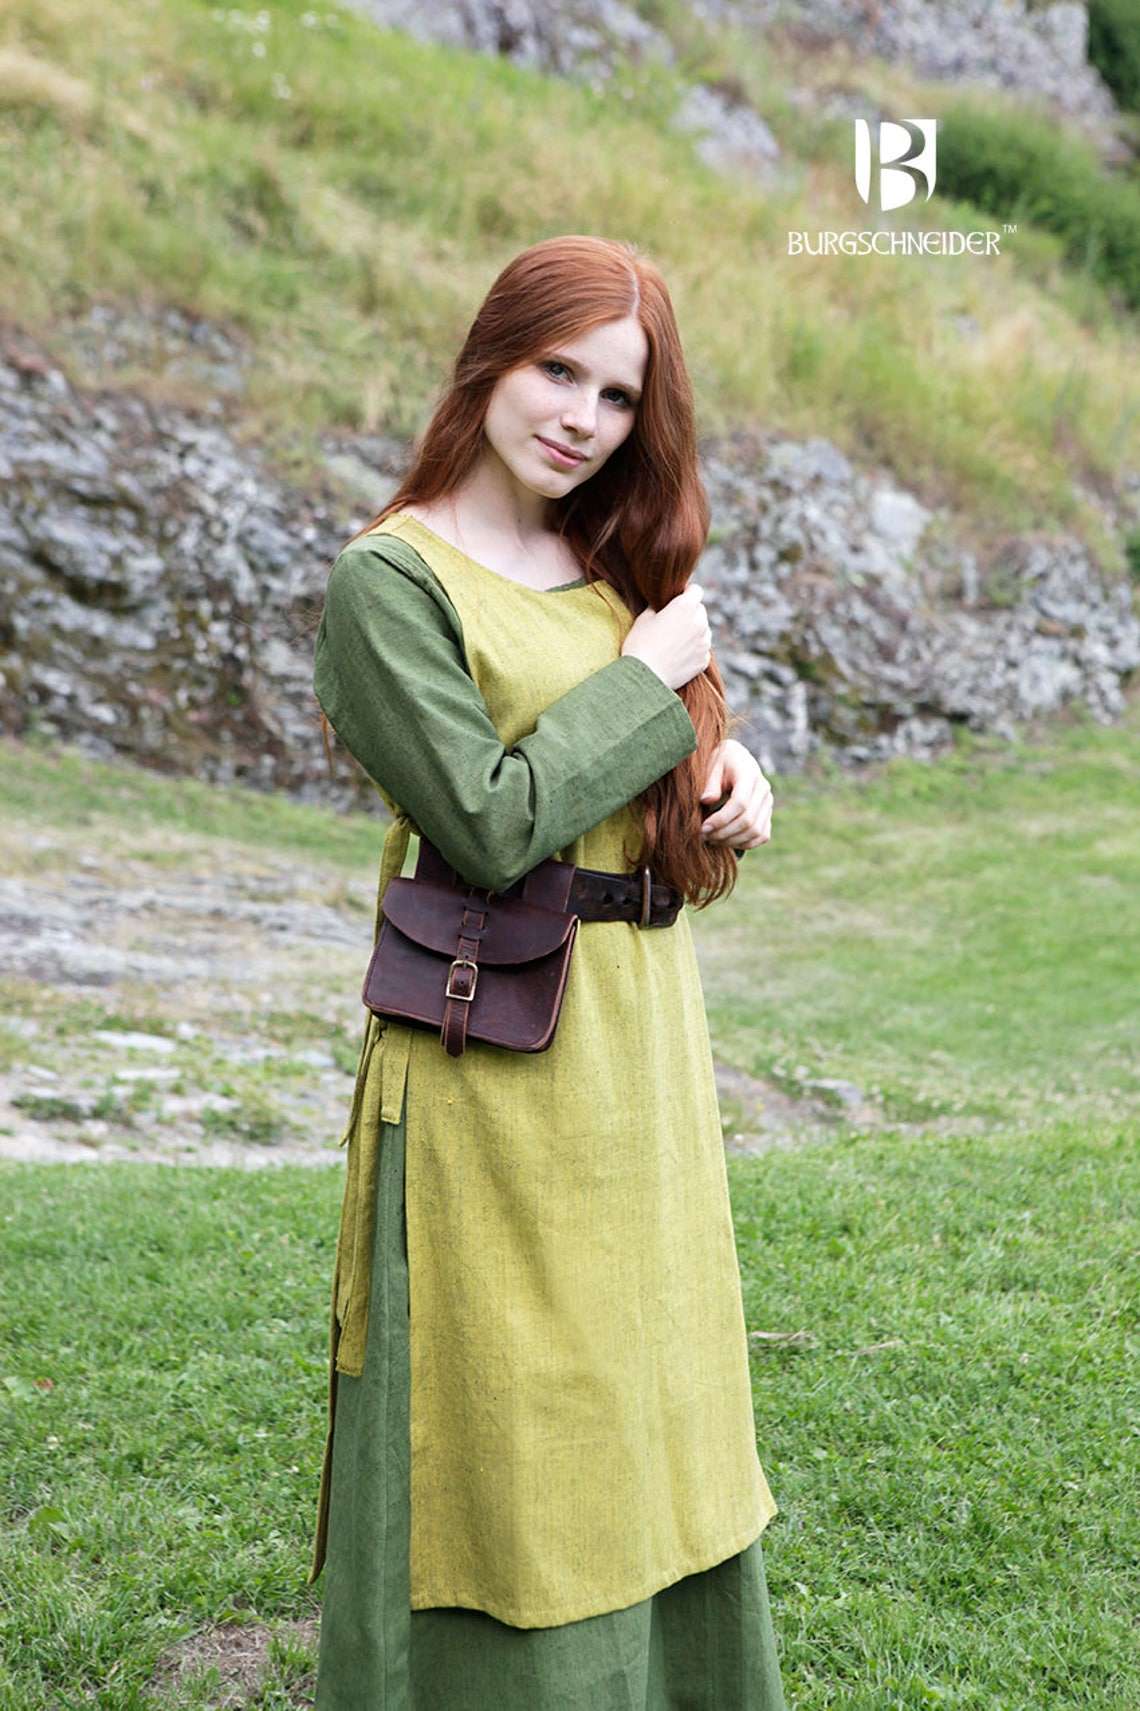 Burgschneider Medieval Viking Larp Cotton Garment Haithabu | Etsy